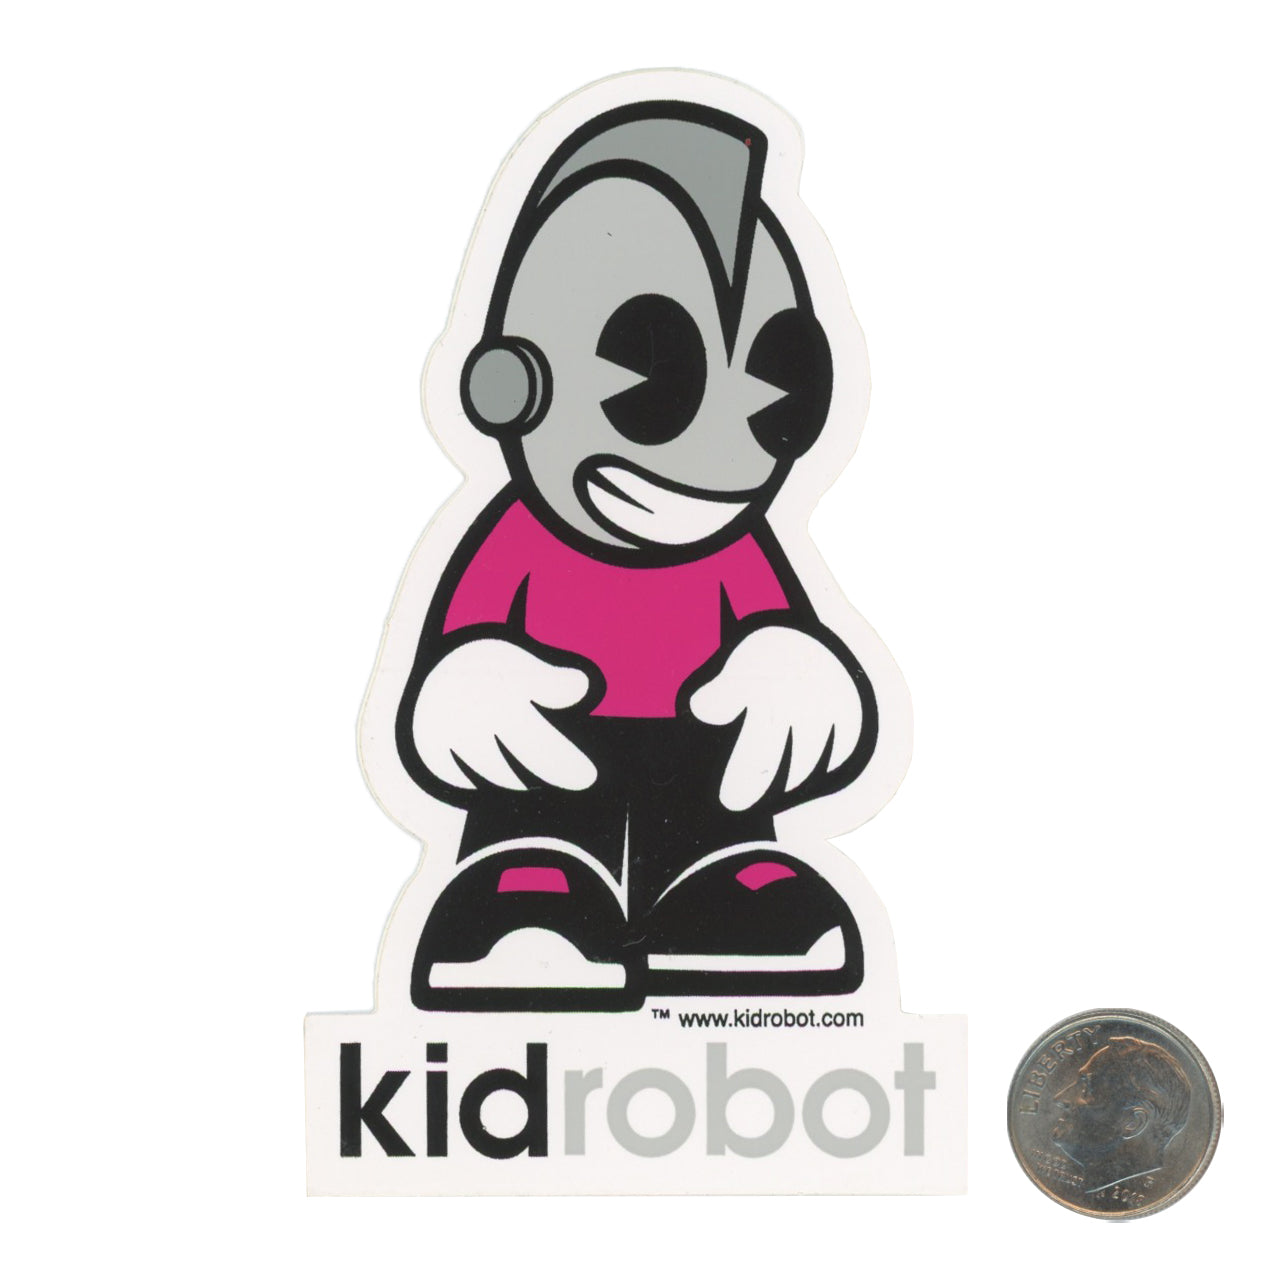 Kidrobot Logo Sticker with dime